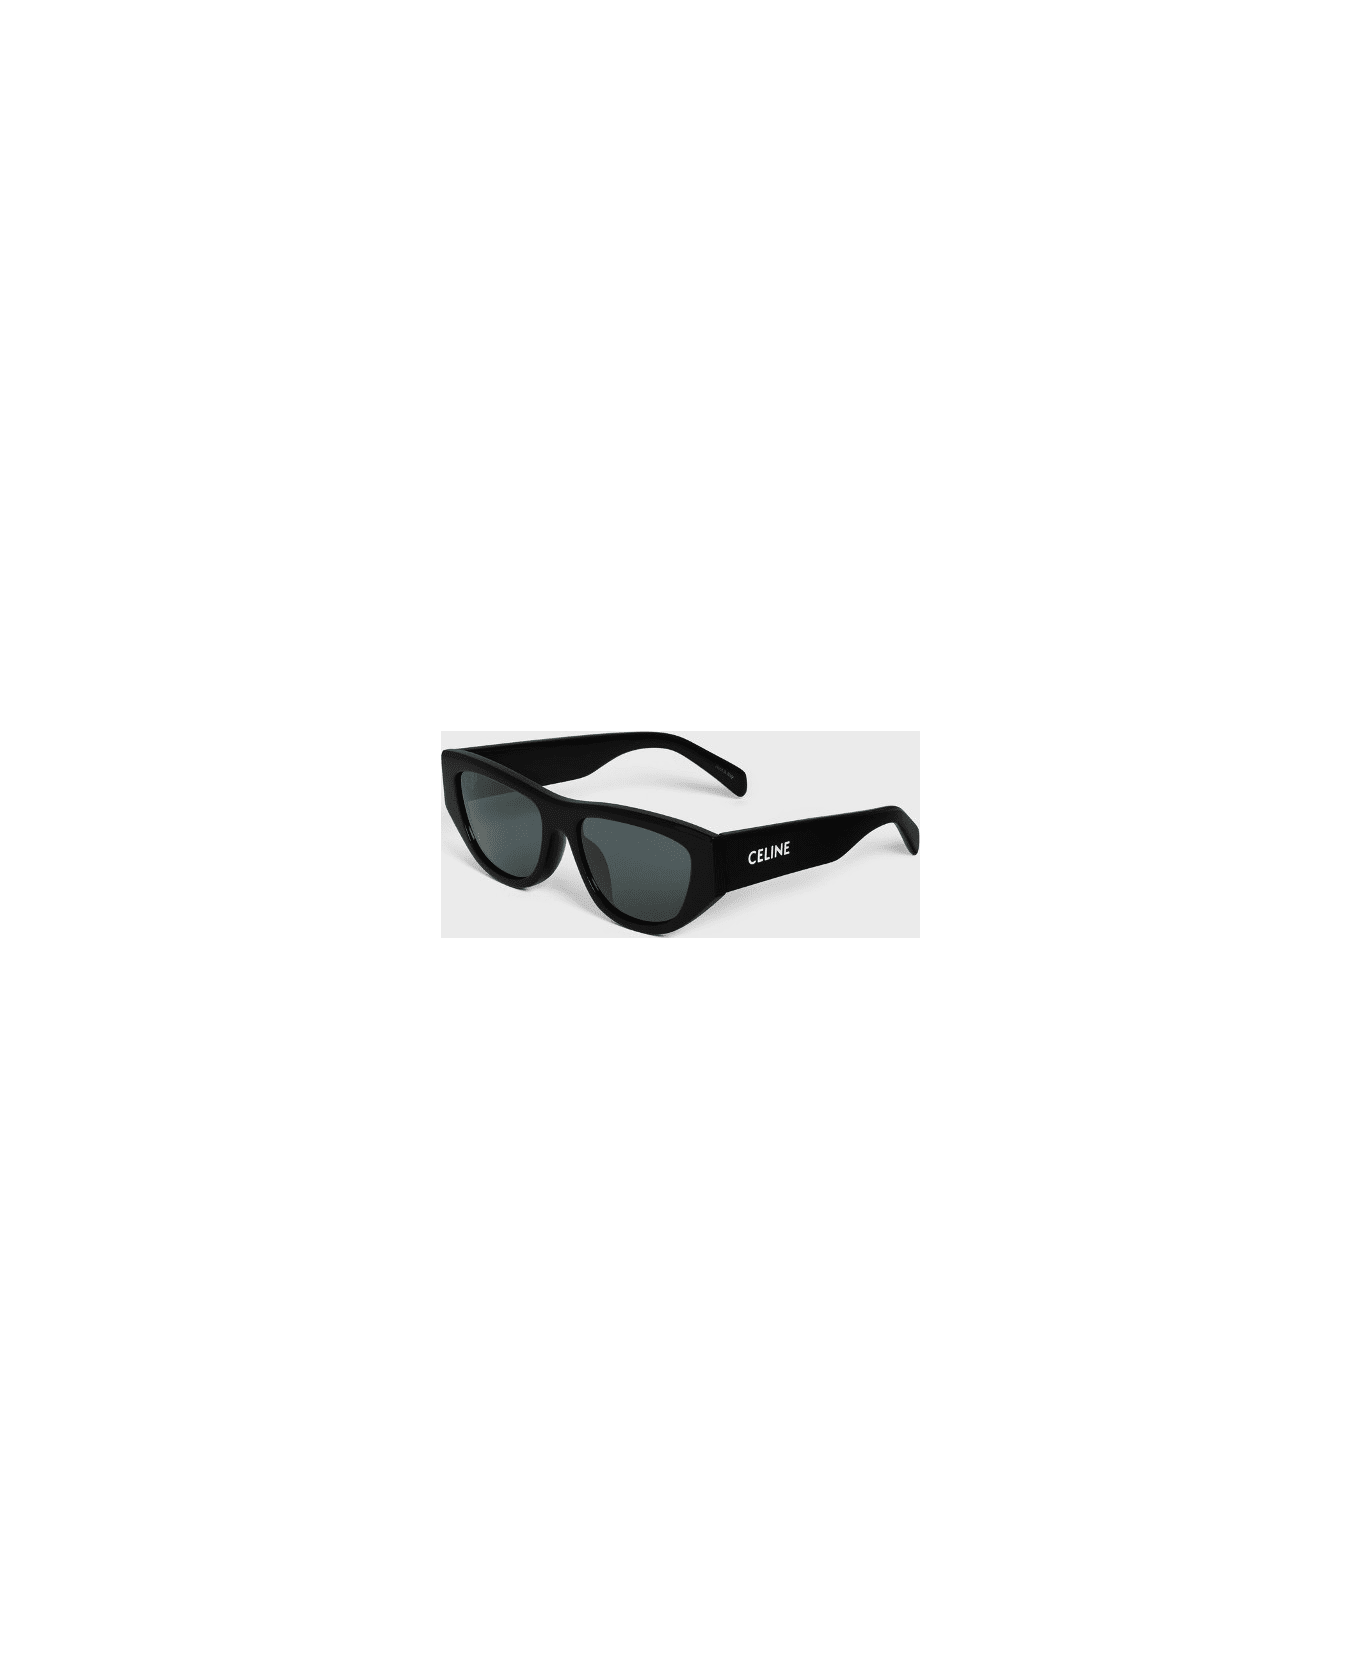 CeJes CL40278I 01A Sunglasses